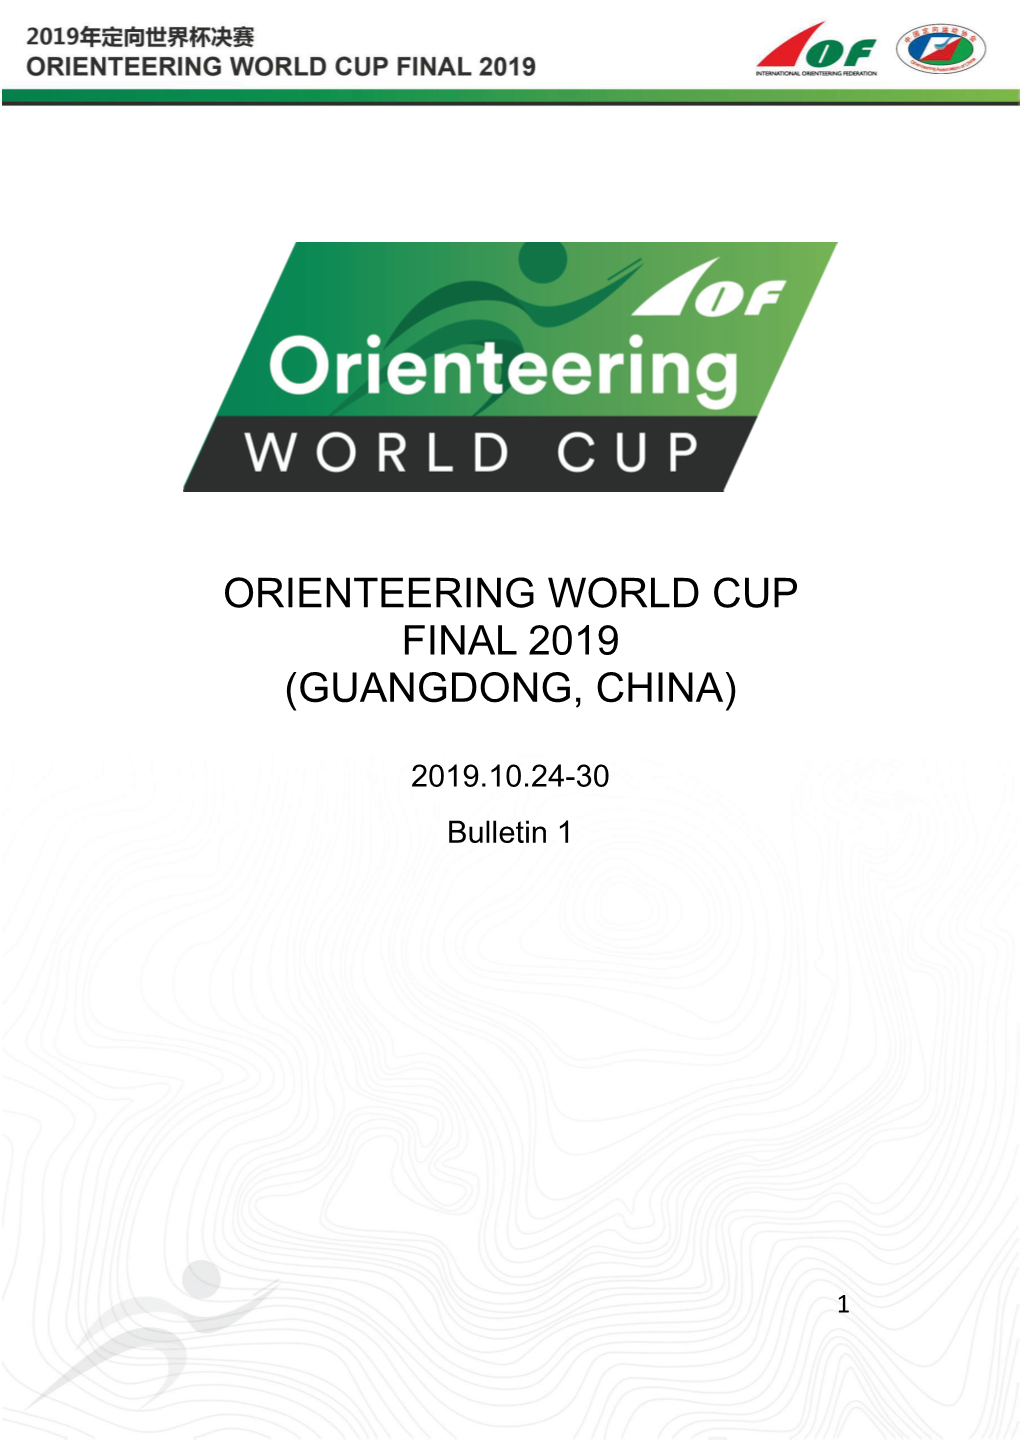 Orienteering World Cup Final 2019 (Guangdong, China)